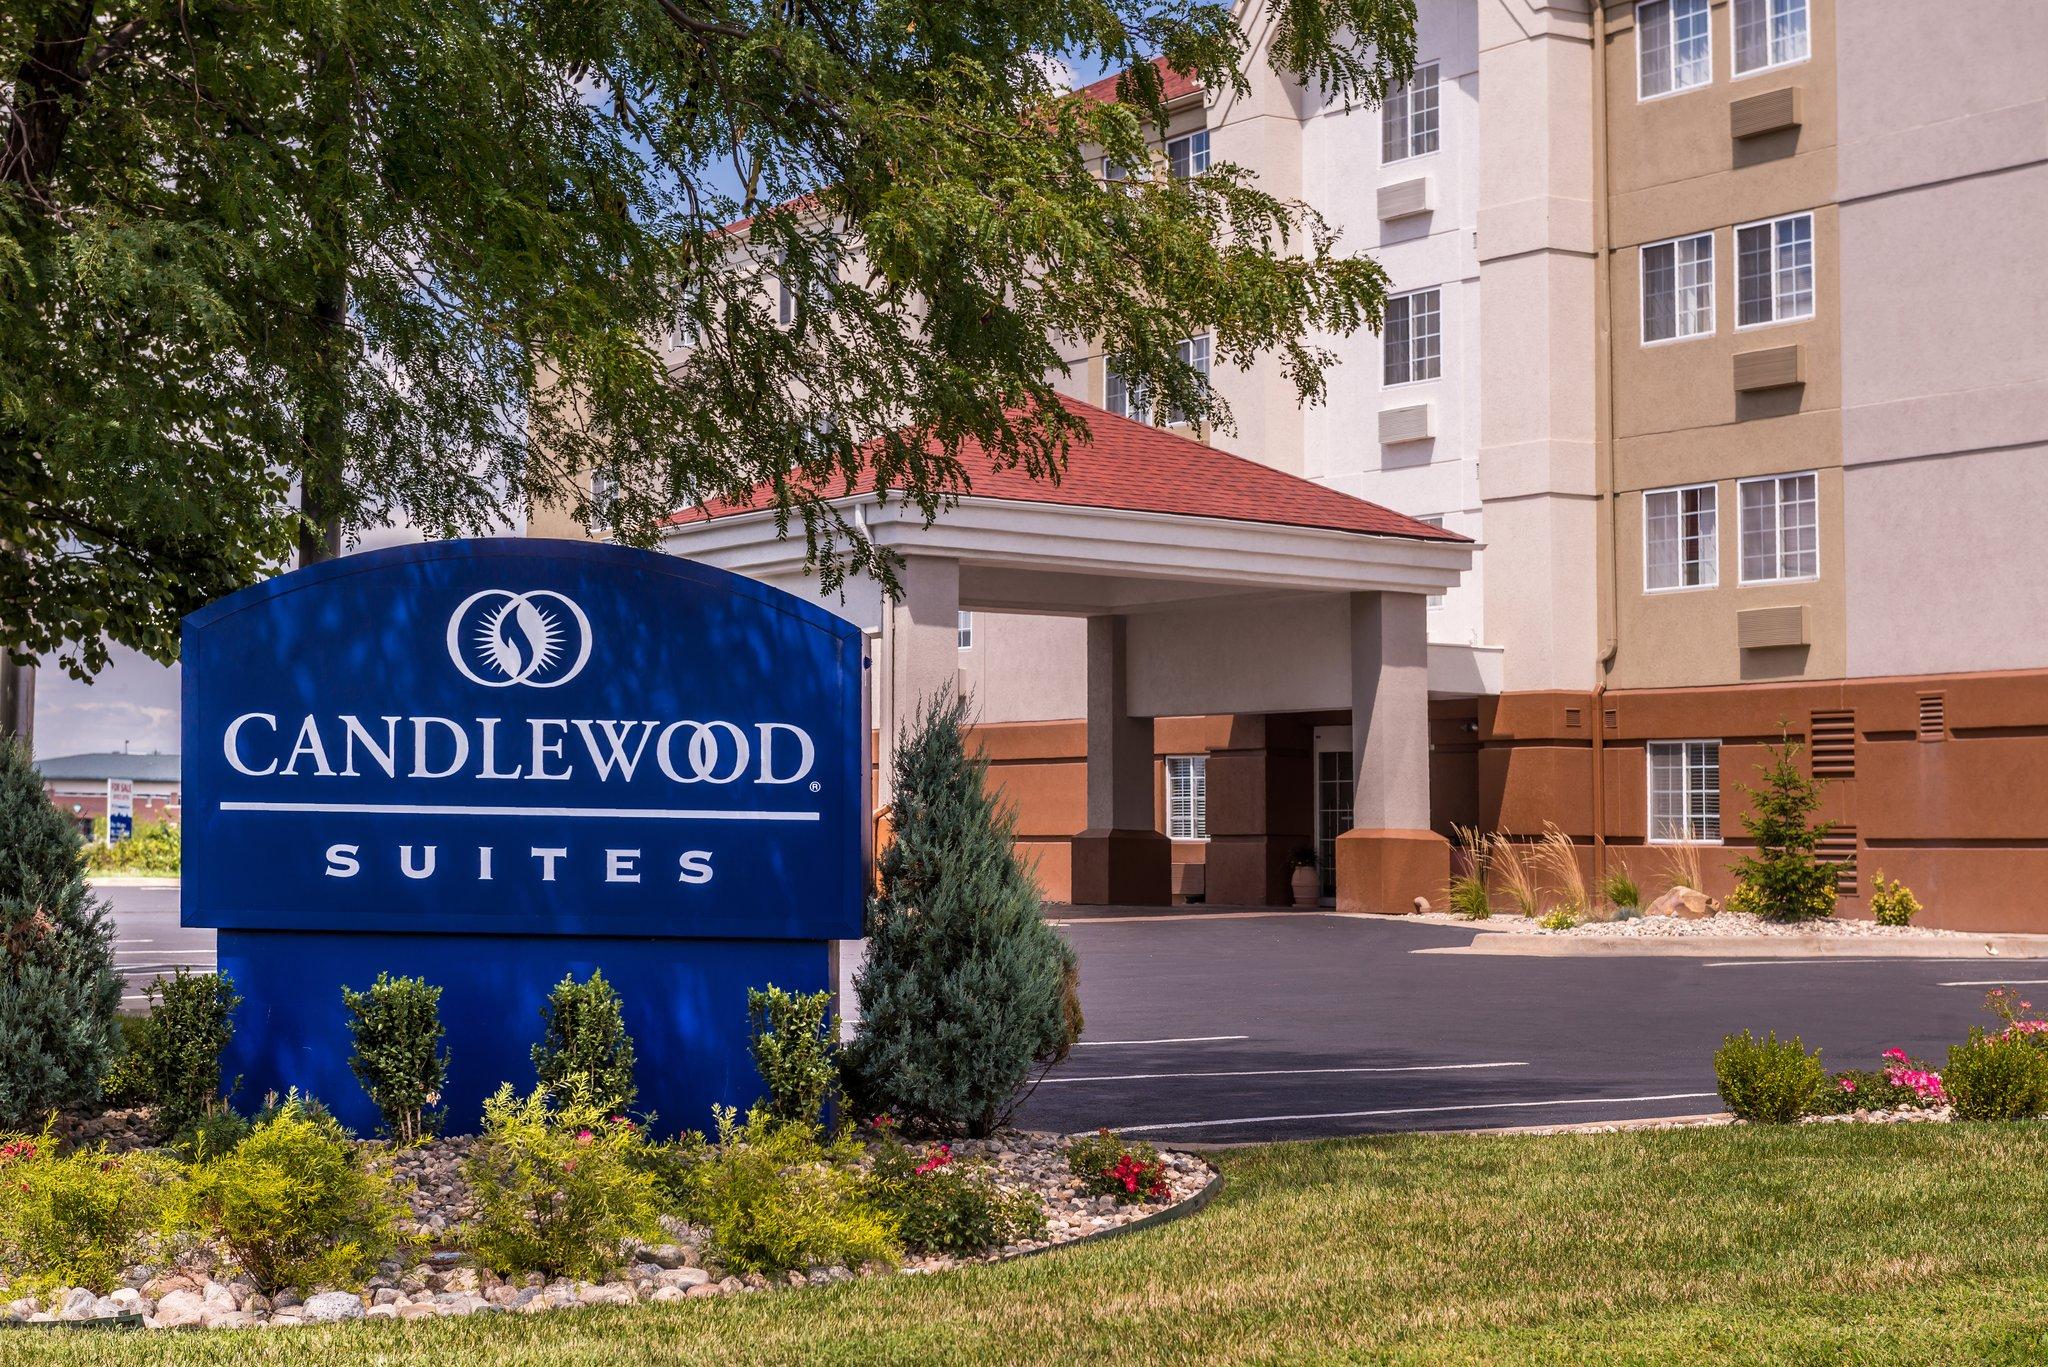 Candlewood Suites Topeka West in Topeka, KS